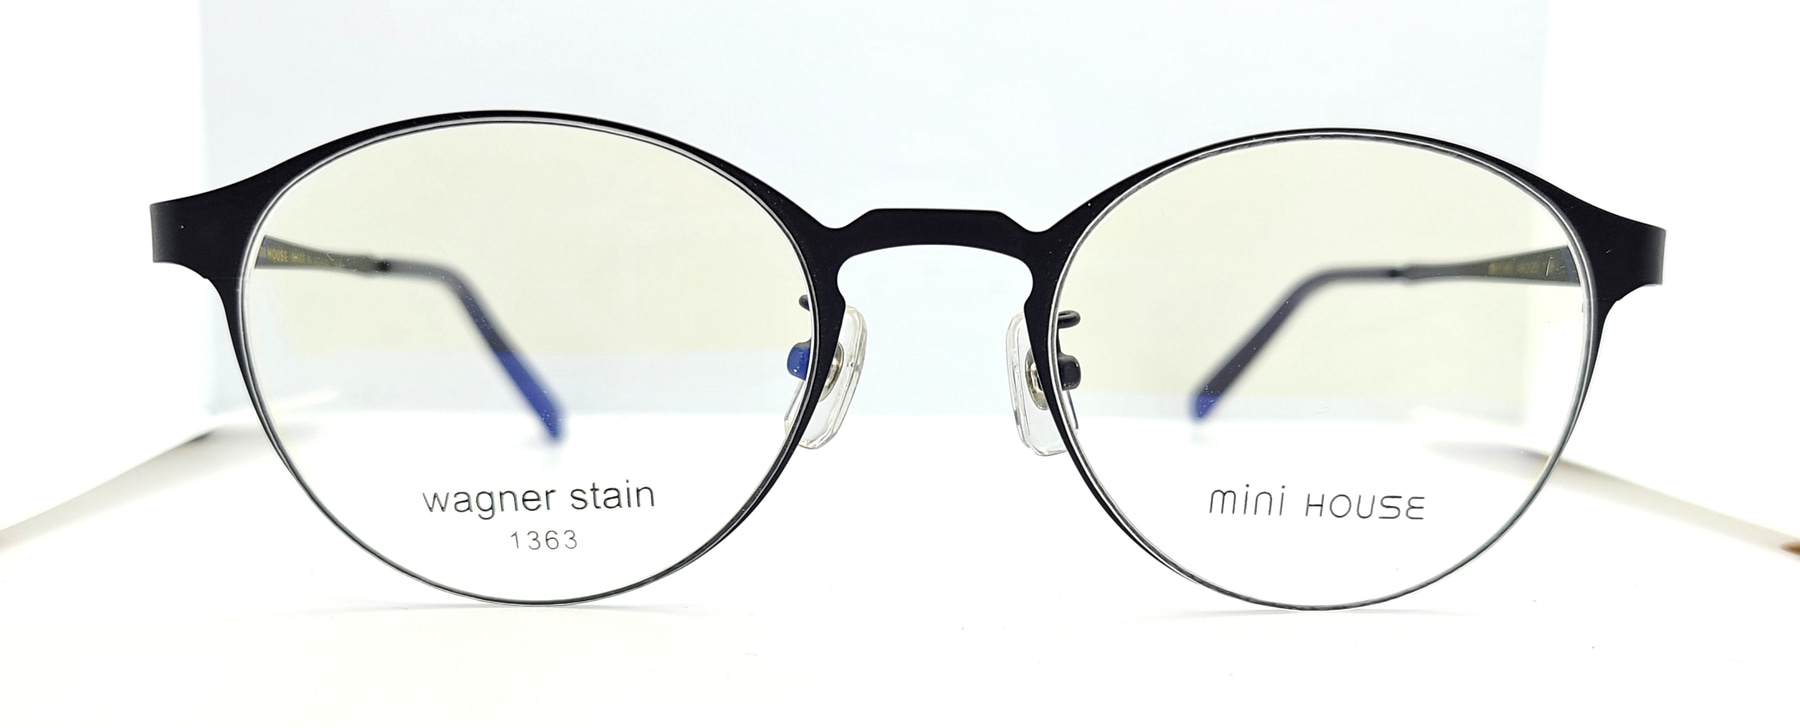 MINIHOUSE M-1363, Korean glasses, sunglasses, eyeglasses, glasses